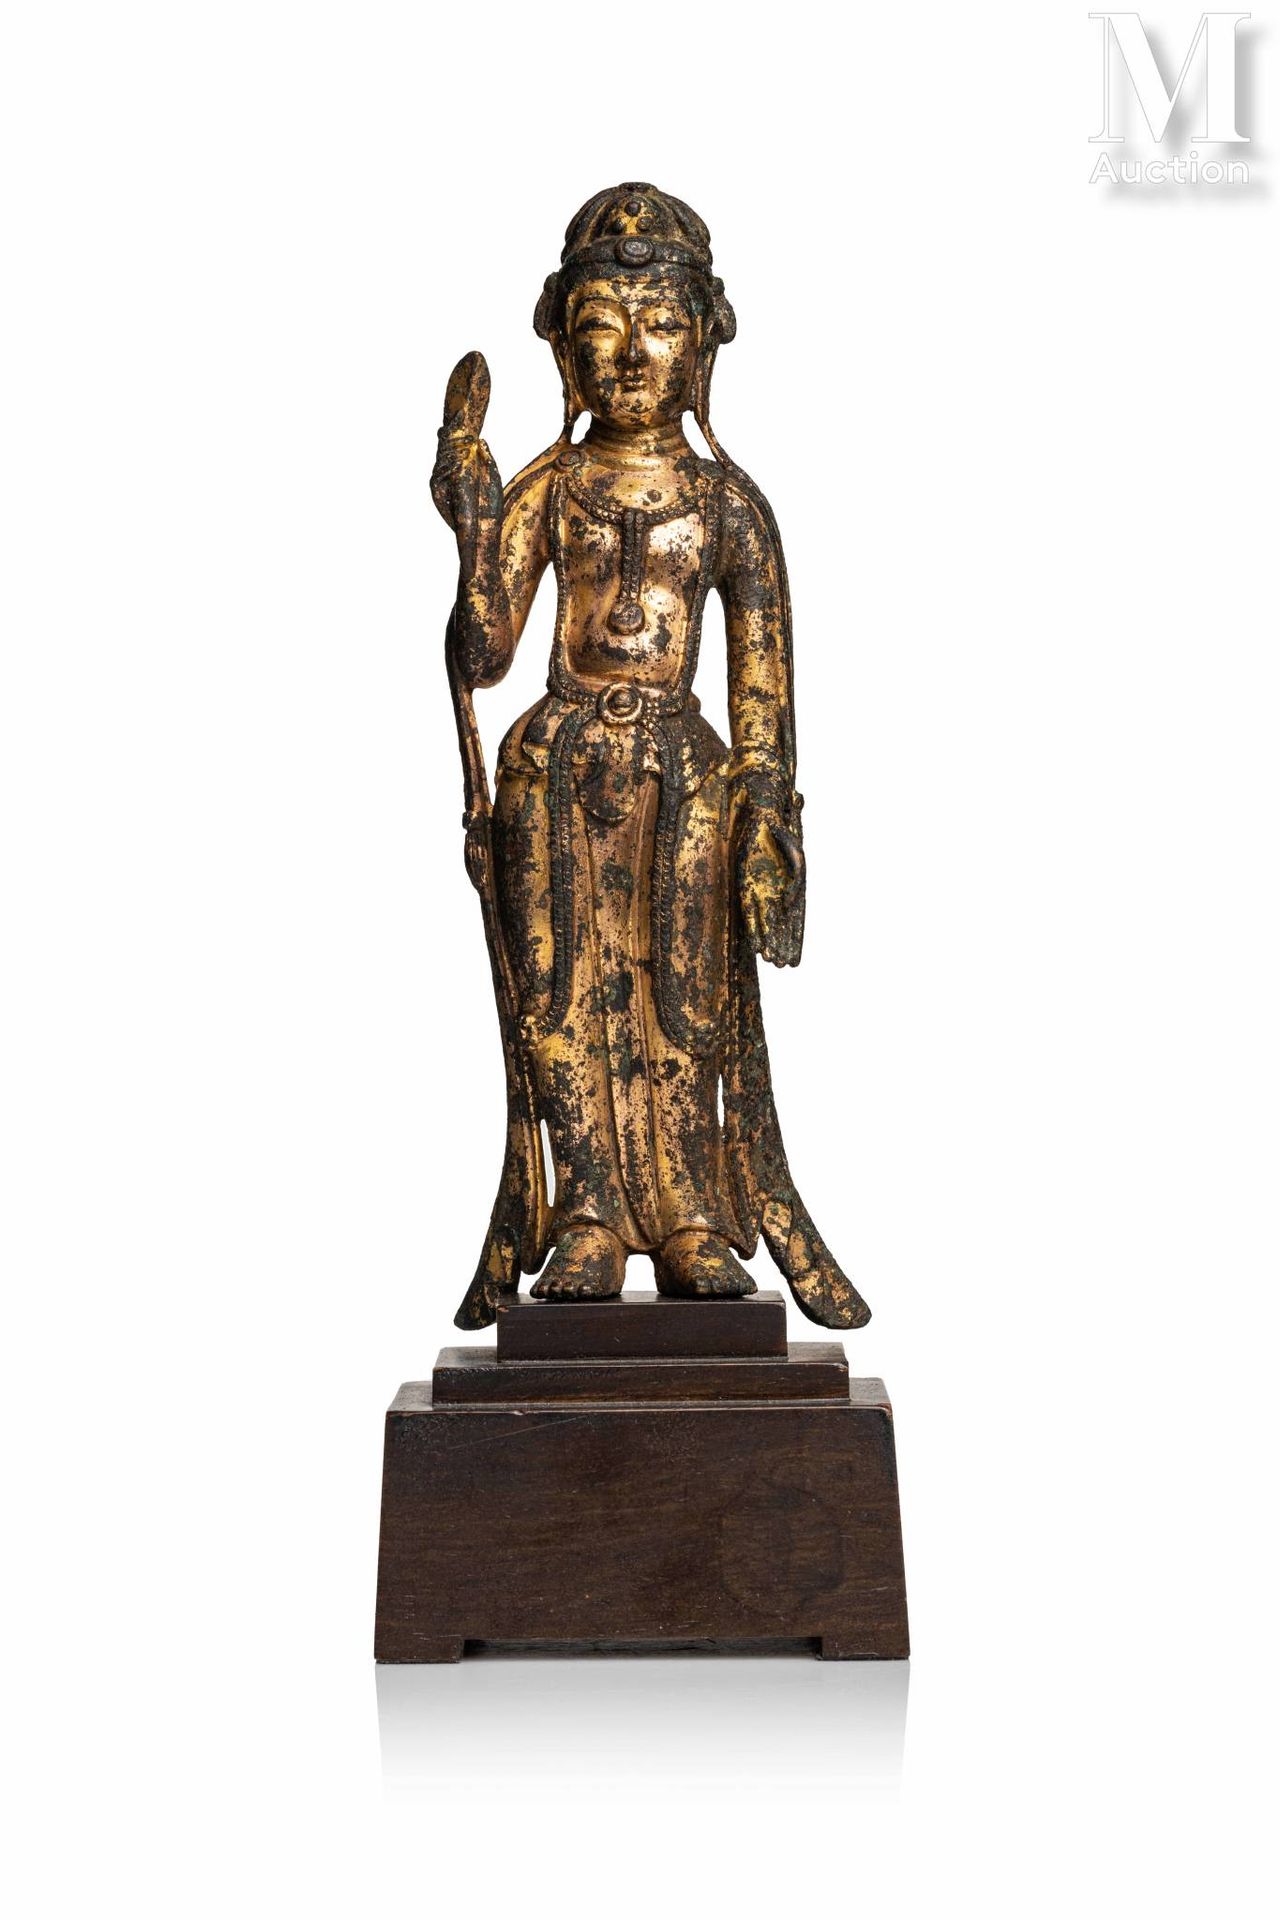 CHINE, Epoque Tang Statuette in gilded bronze

representing Avalokiteshvara stan&hellip;